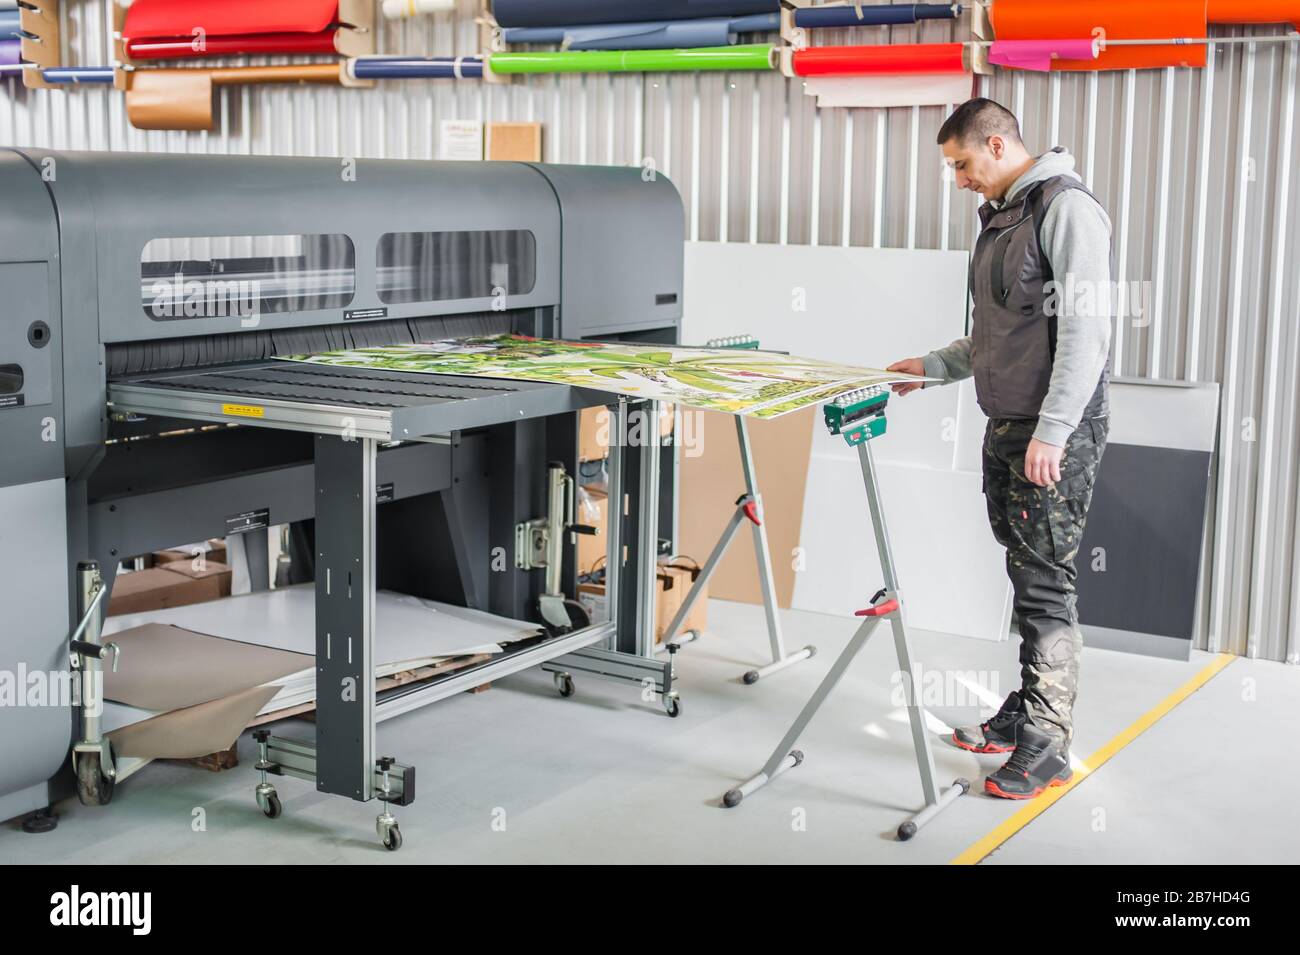 Technician worker operator works on large premium industrial printer